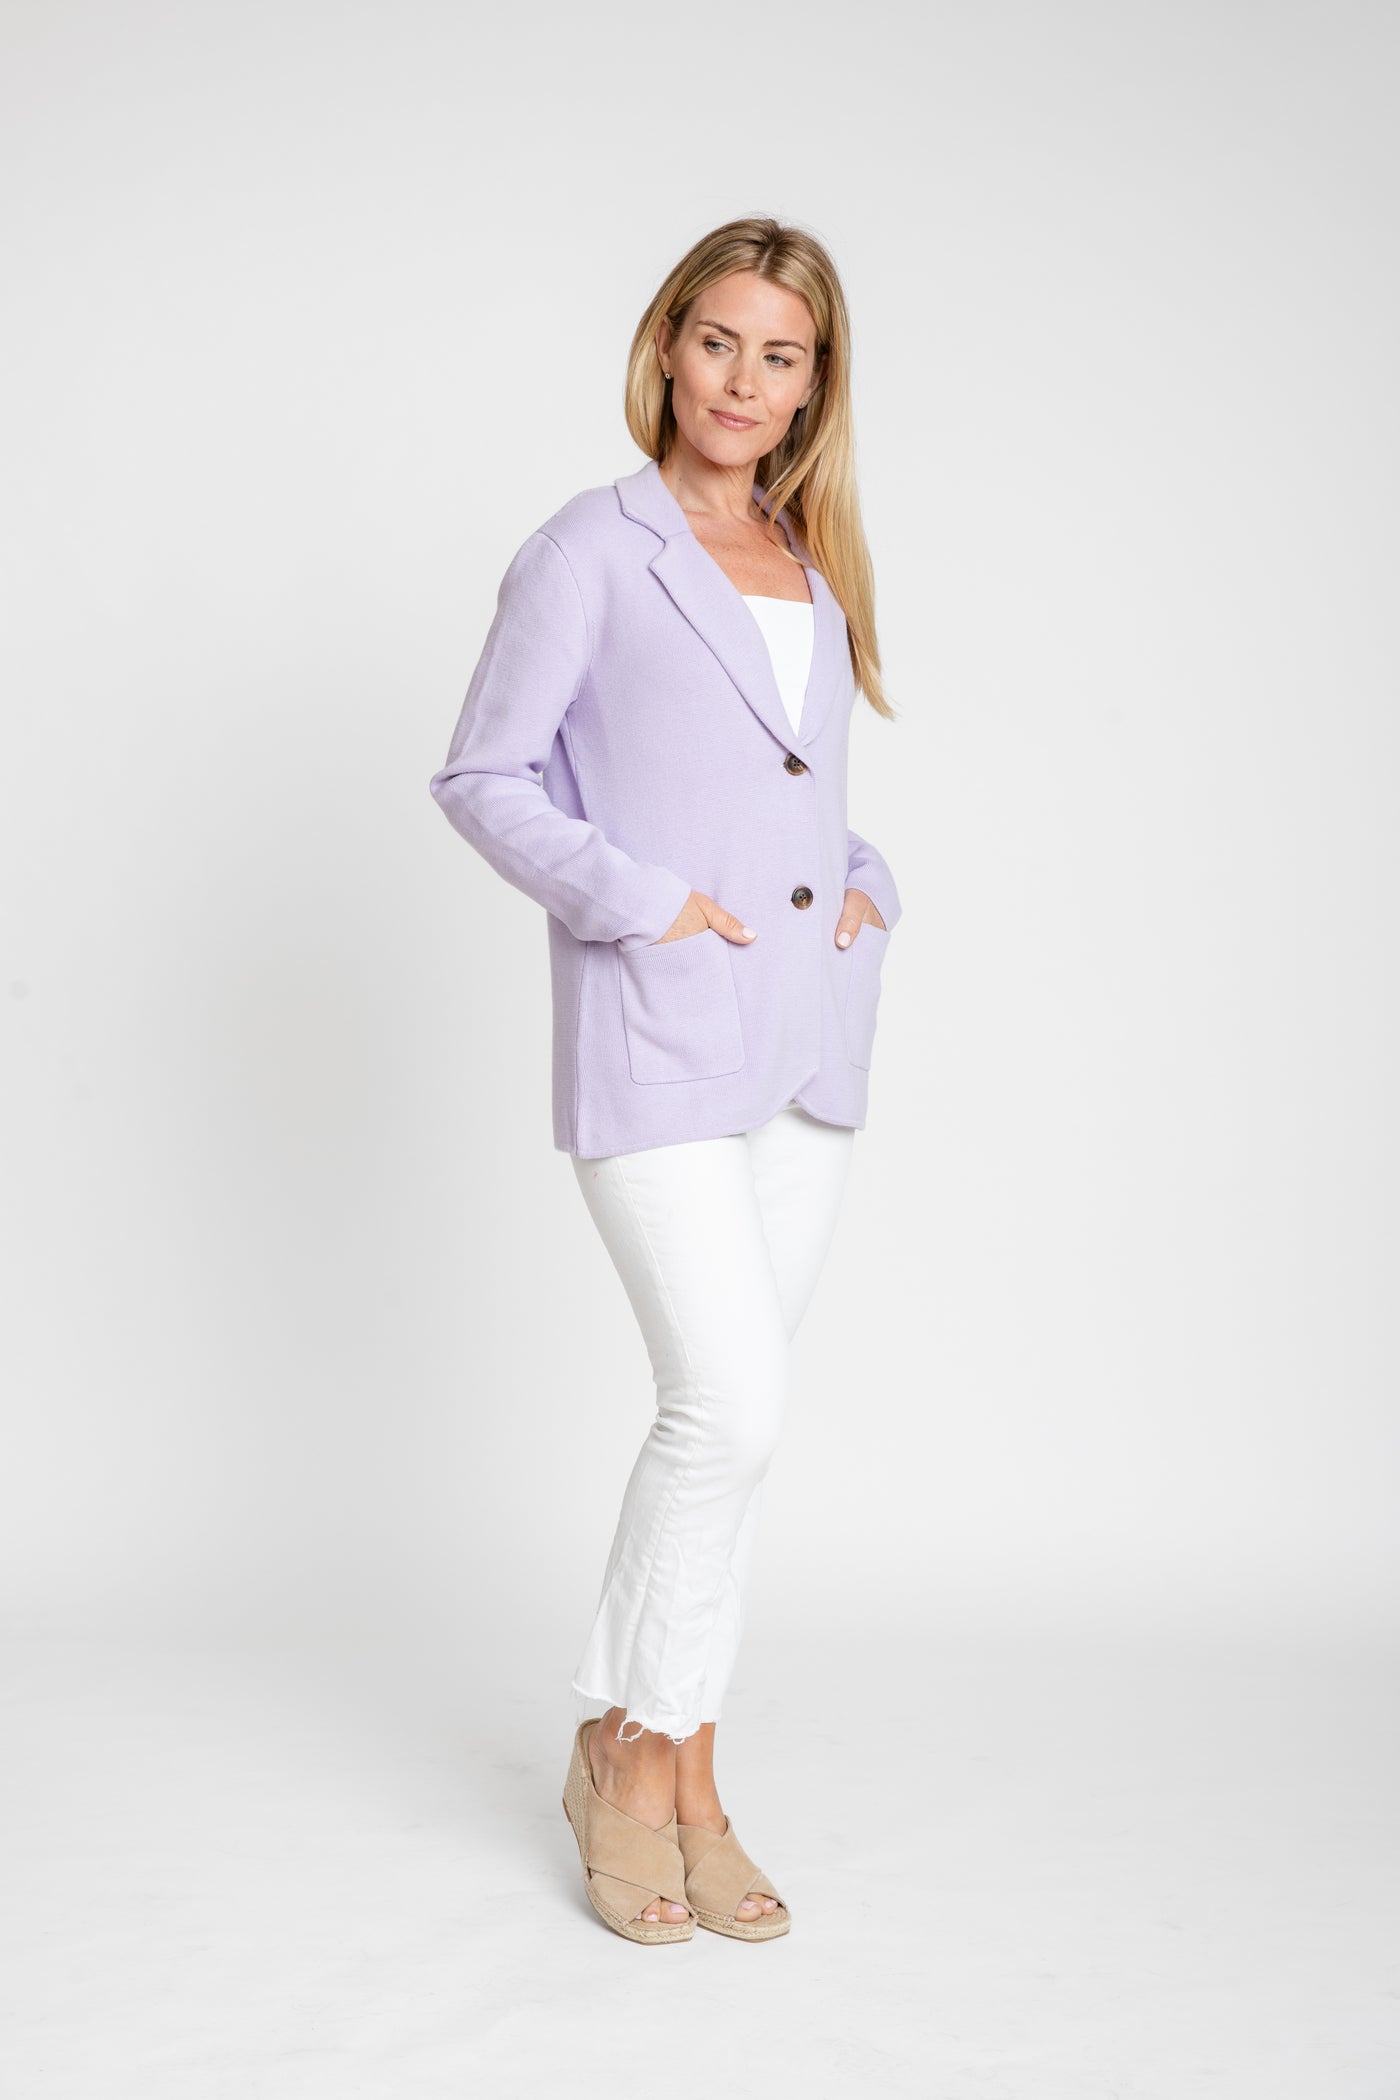 The Milly Knit Blazer | Lavender